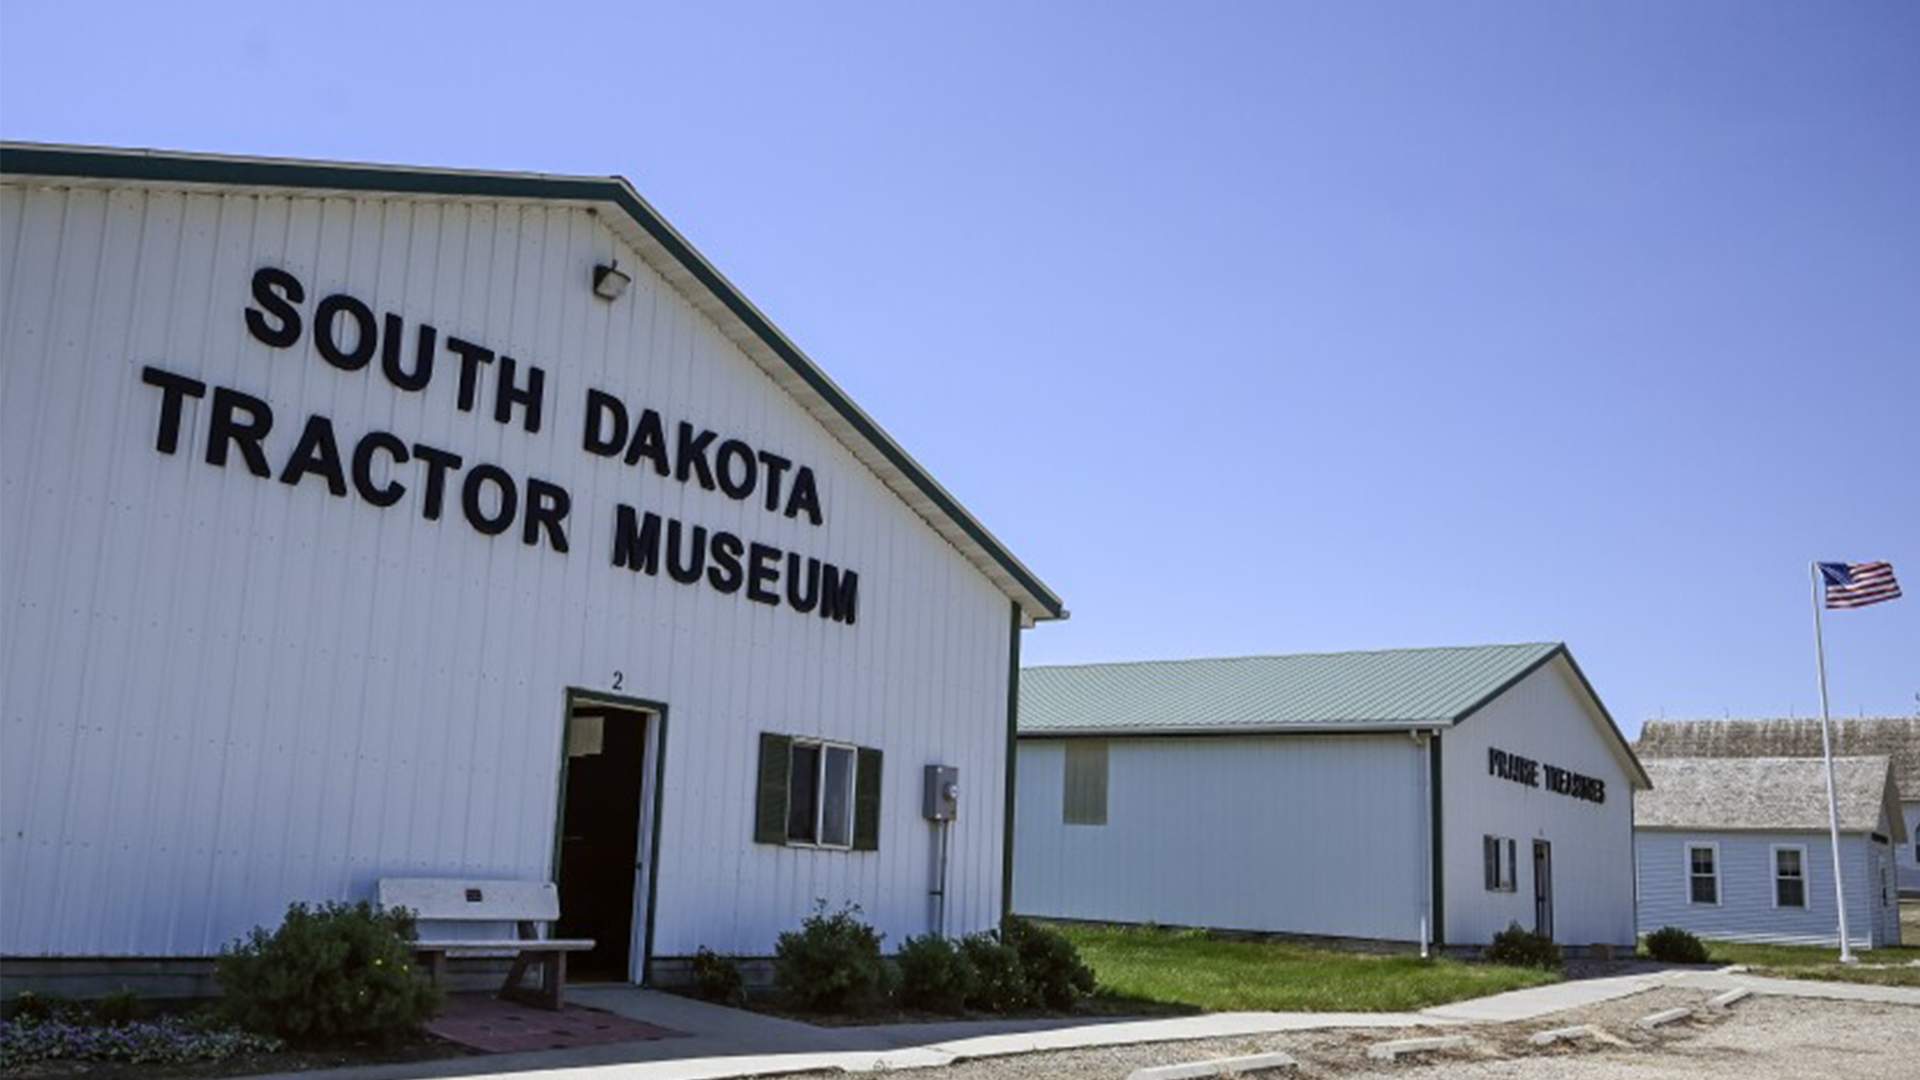 South Dakota Tractor Museum